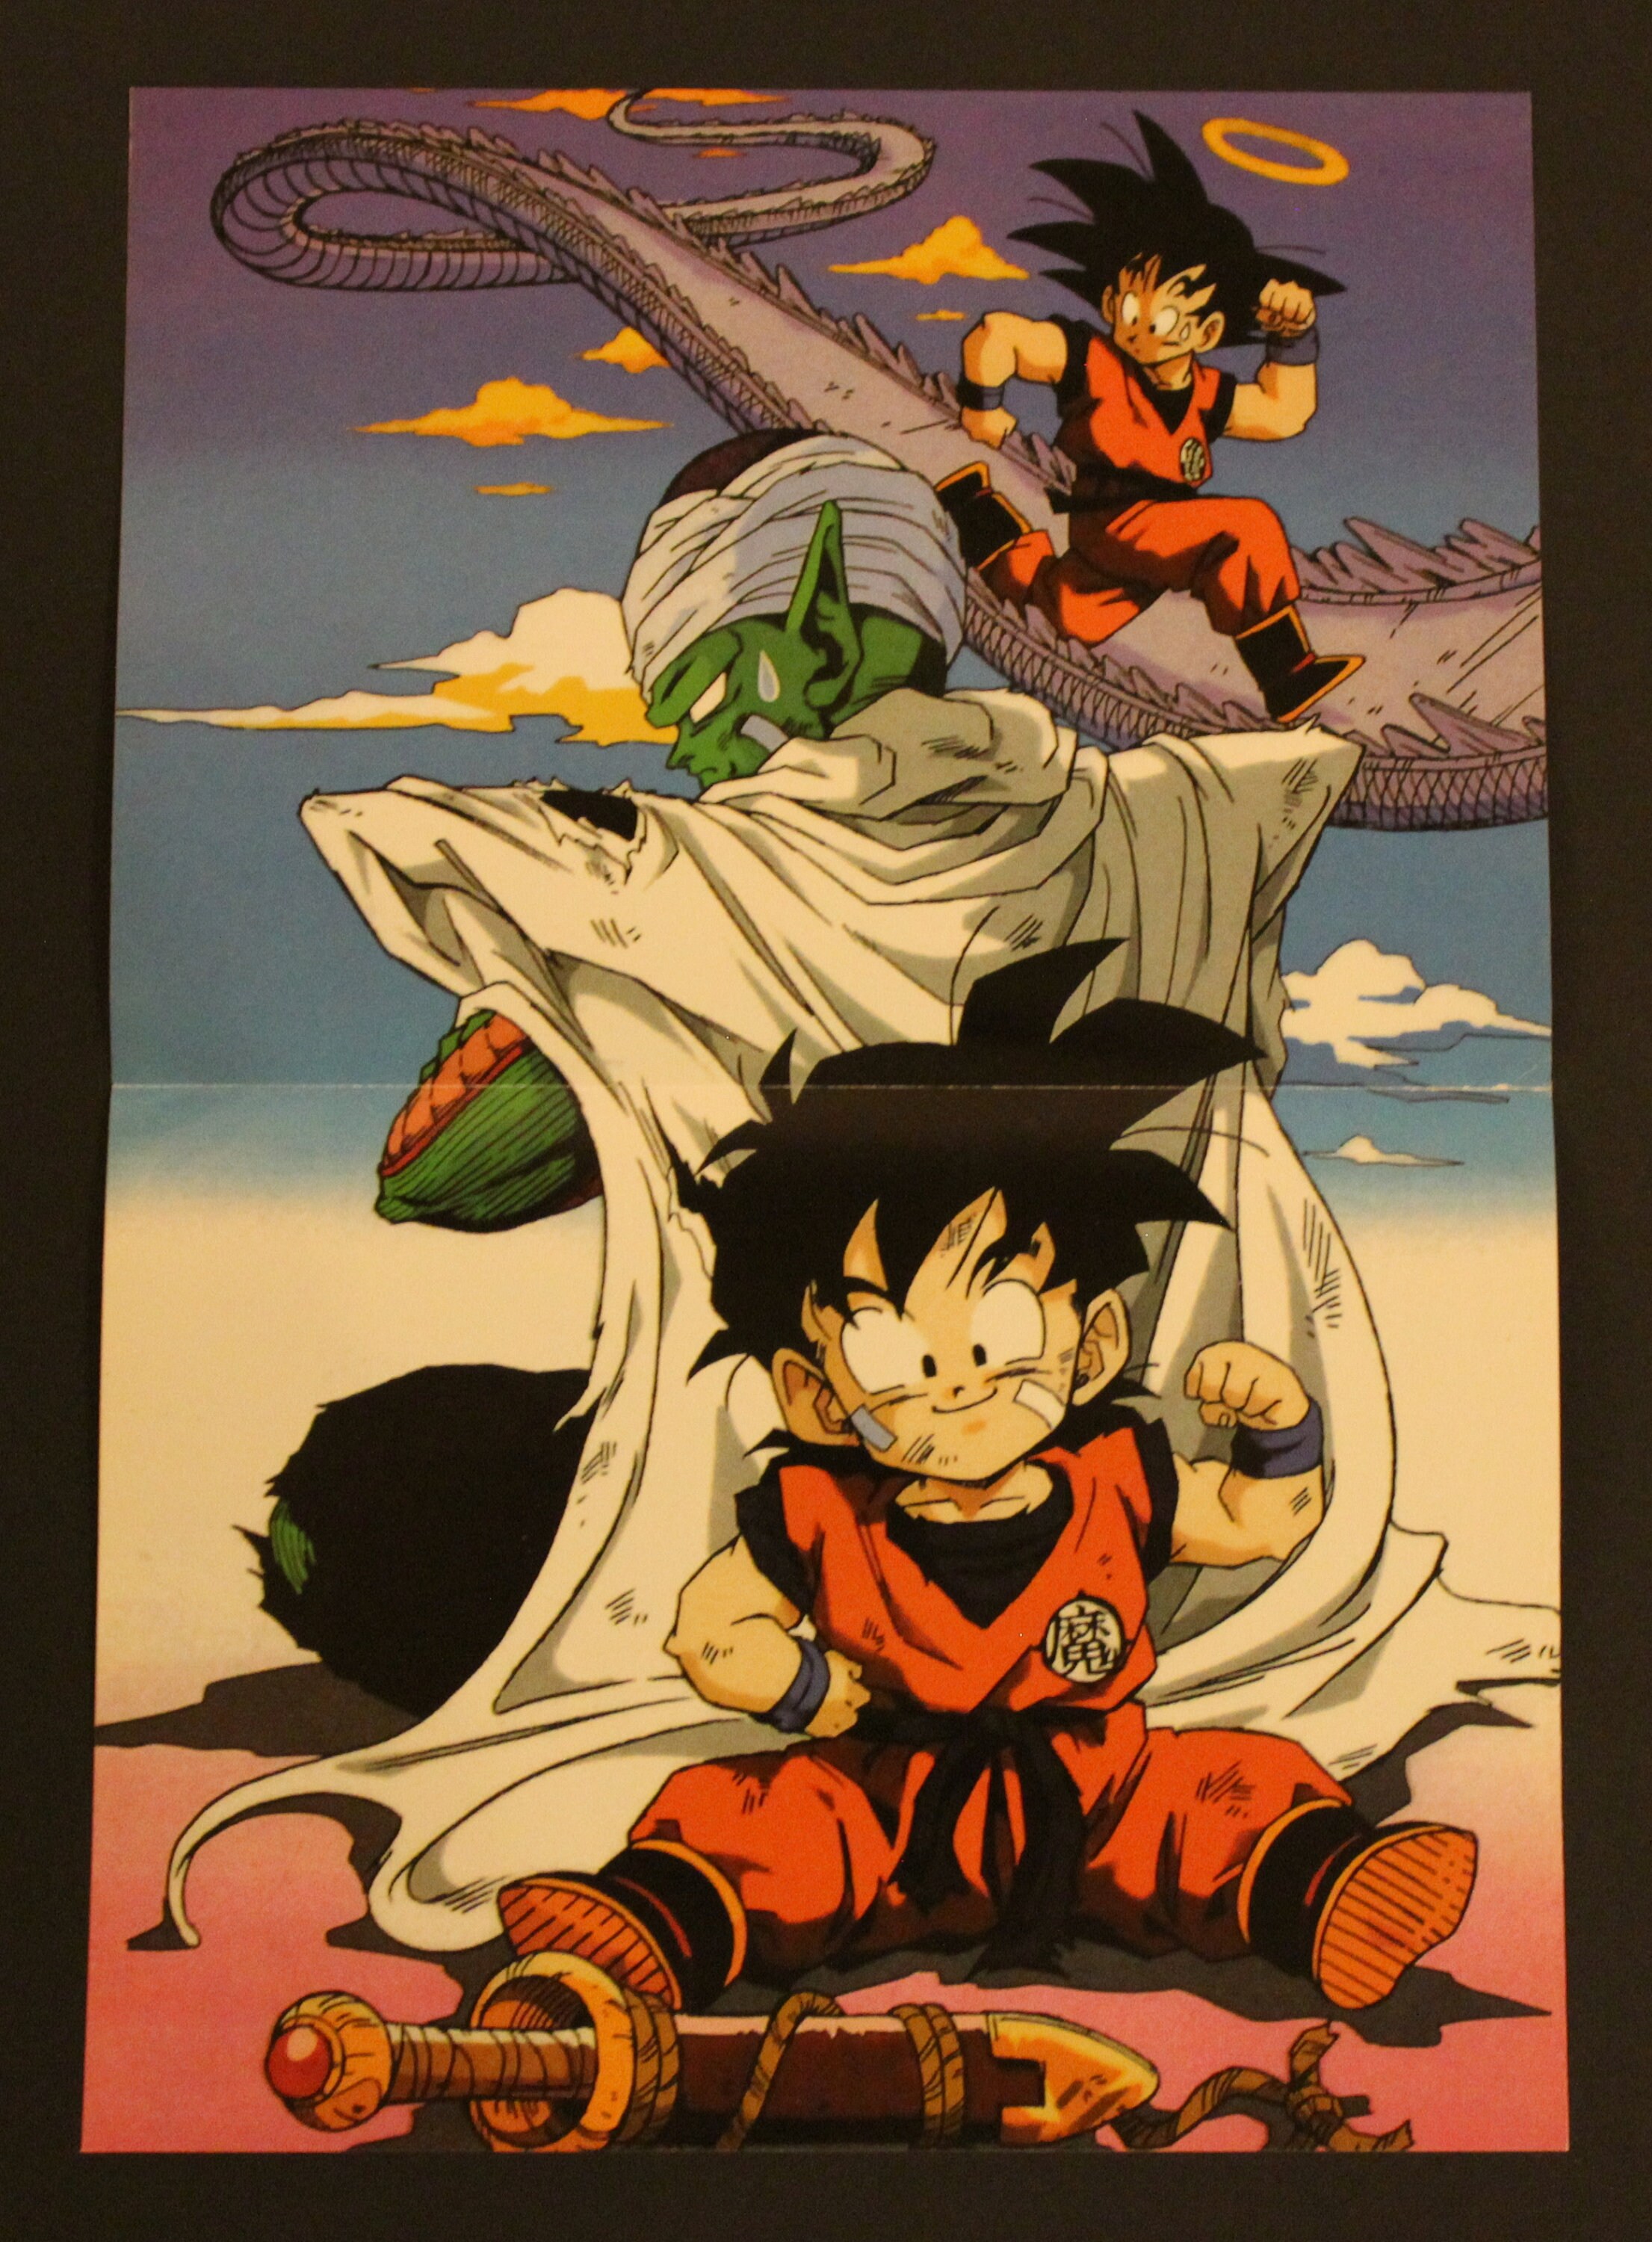 Kid buu Dragon Ball Z Face - Drawing DBZ Majin Buu Poster by eLedesign22